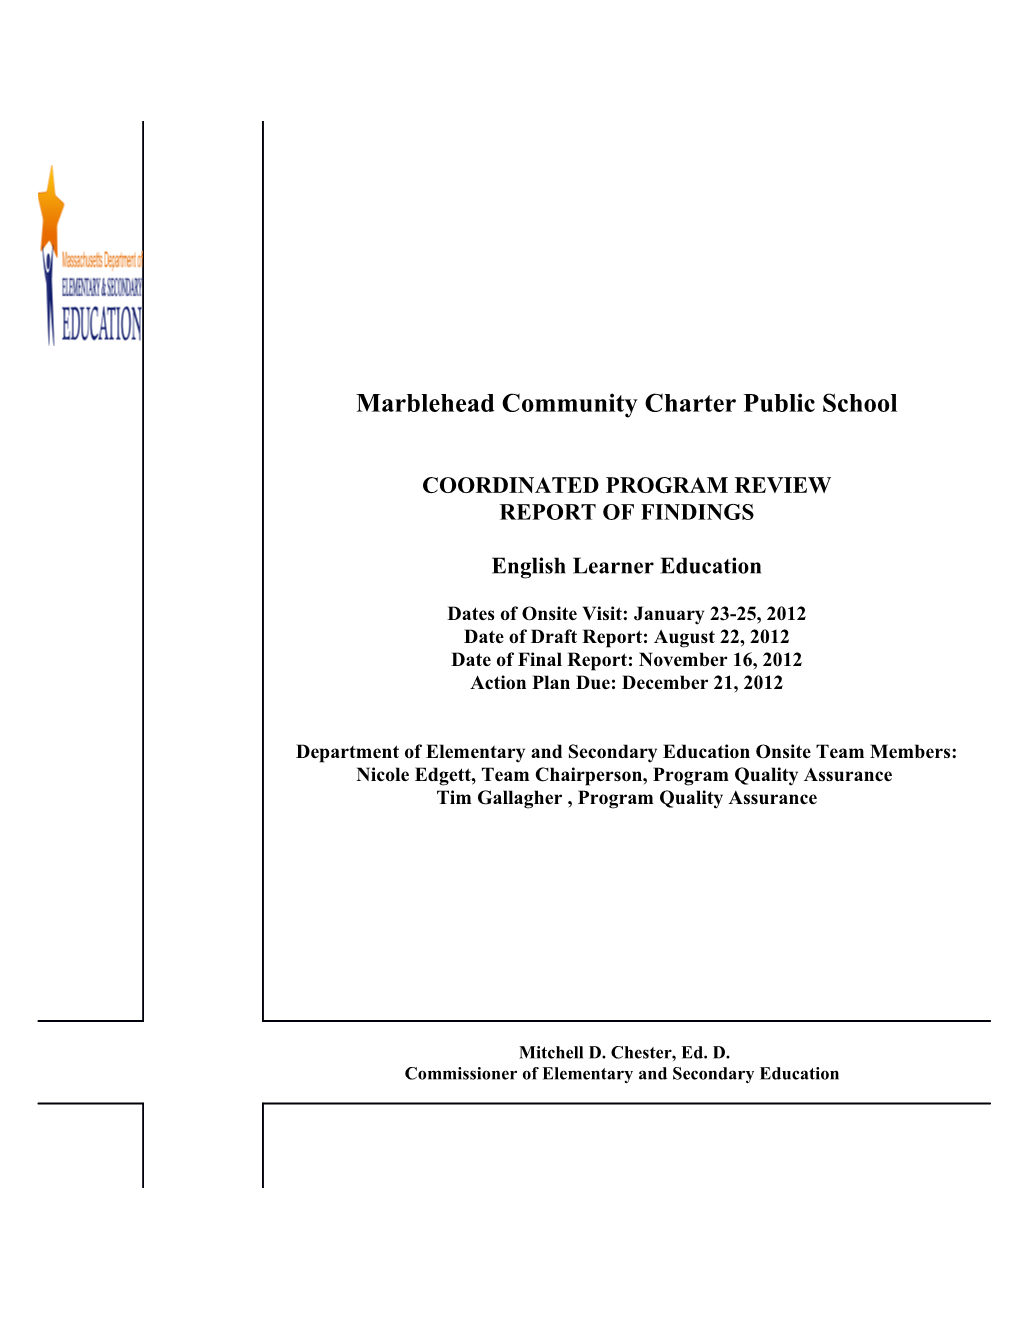 ELL CPR Report Marblehead Community Charter Public School 2012